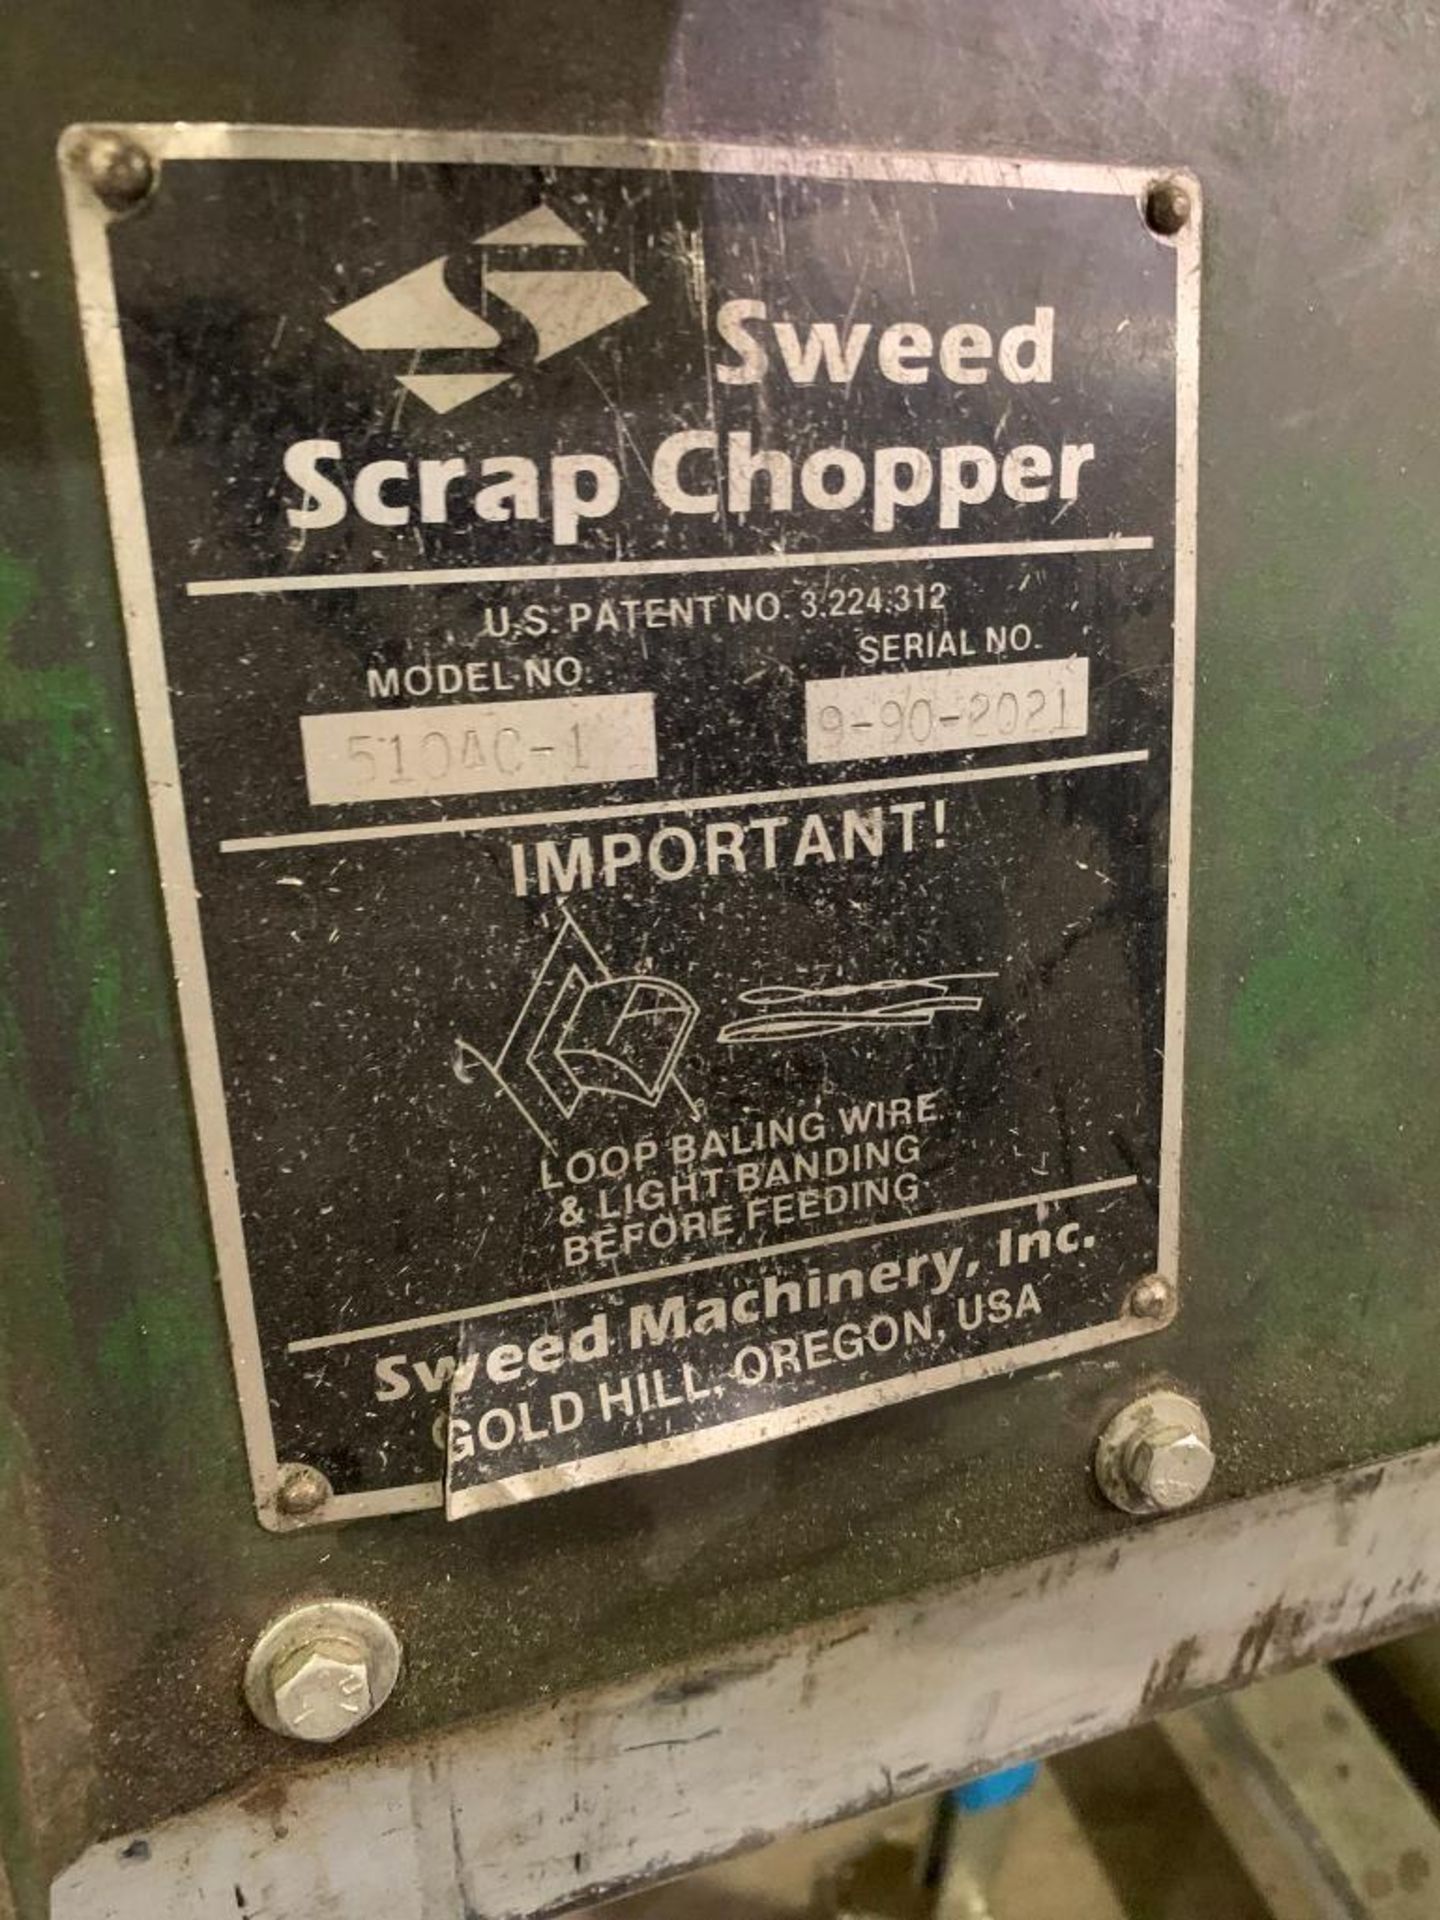 Sweed Scrap Chopper, Model 510AC-1, S/N 9-99-2021 - Image 4 of 4